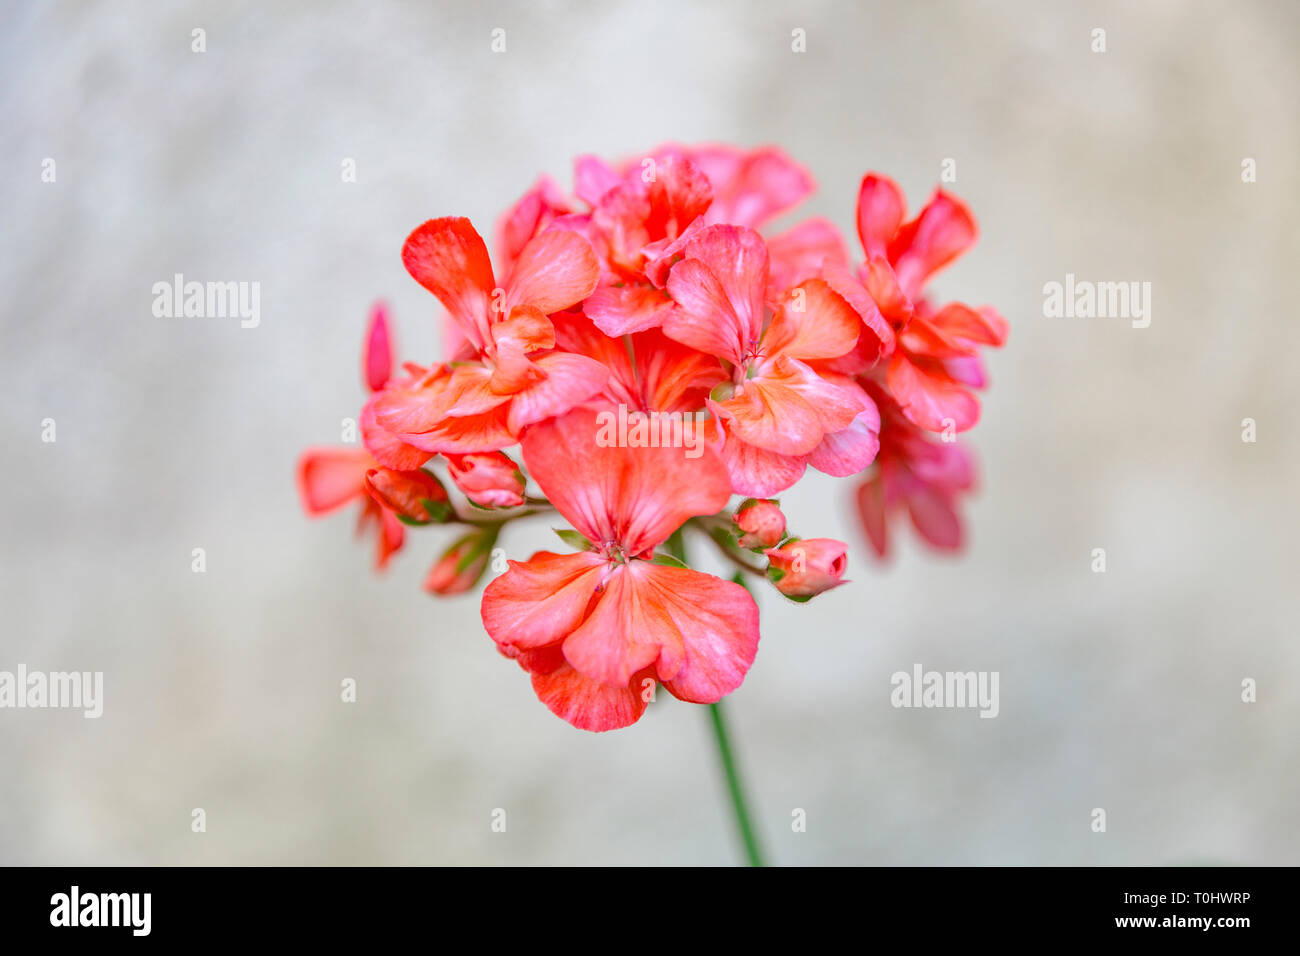 A single Geranium flower cluster Stock Photo